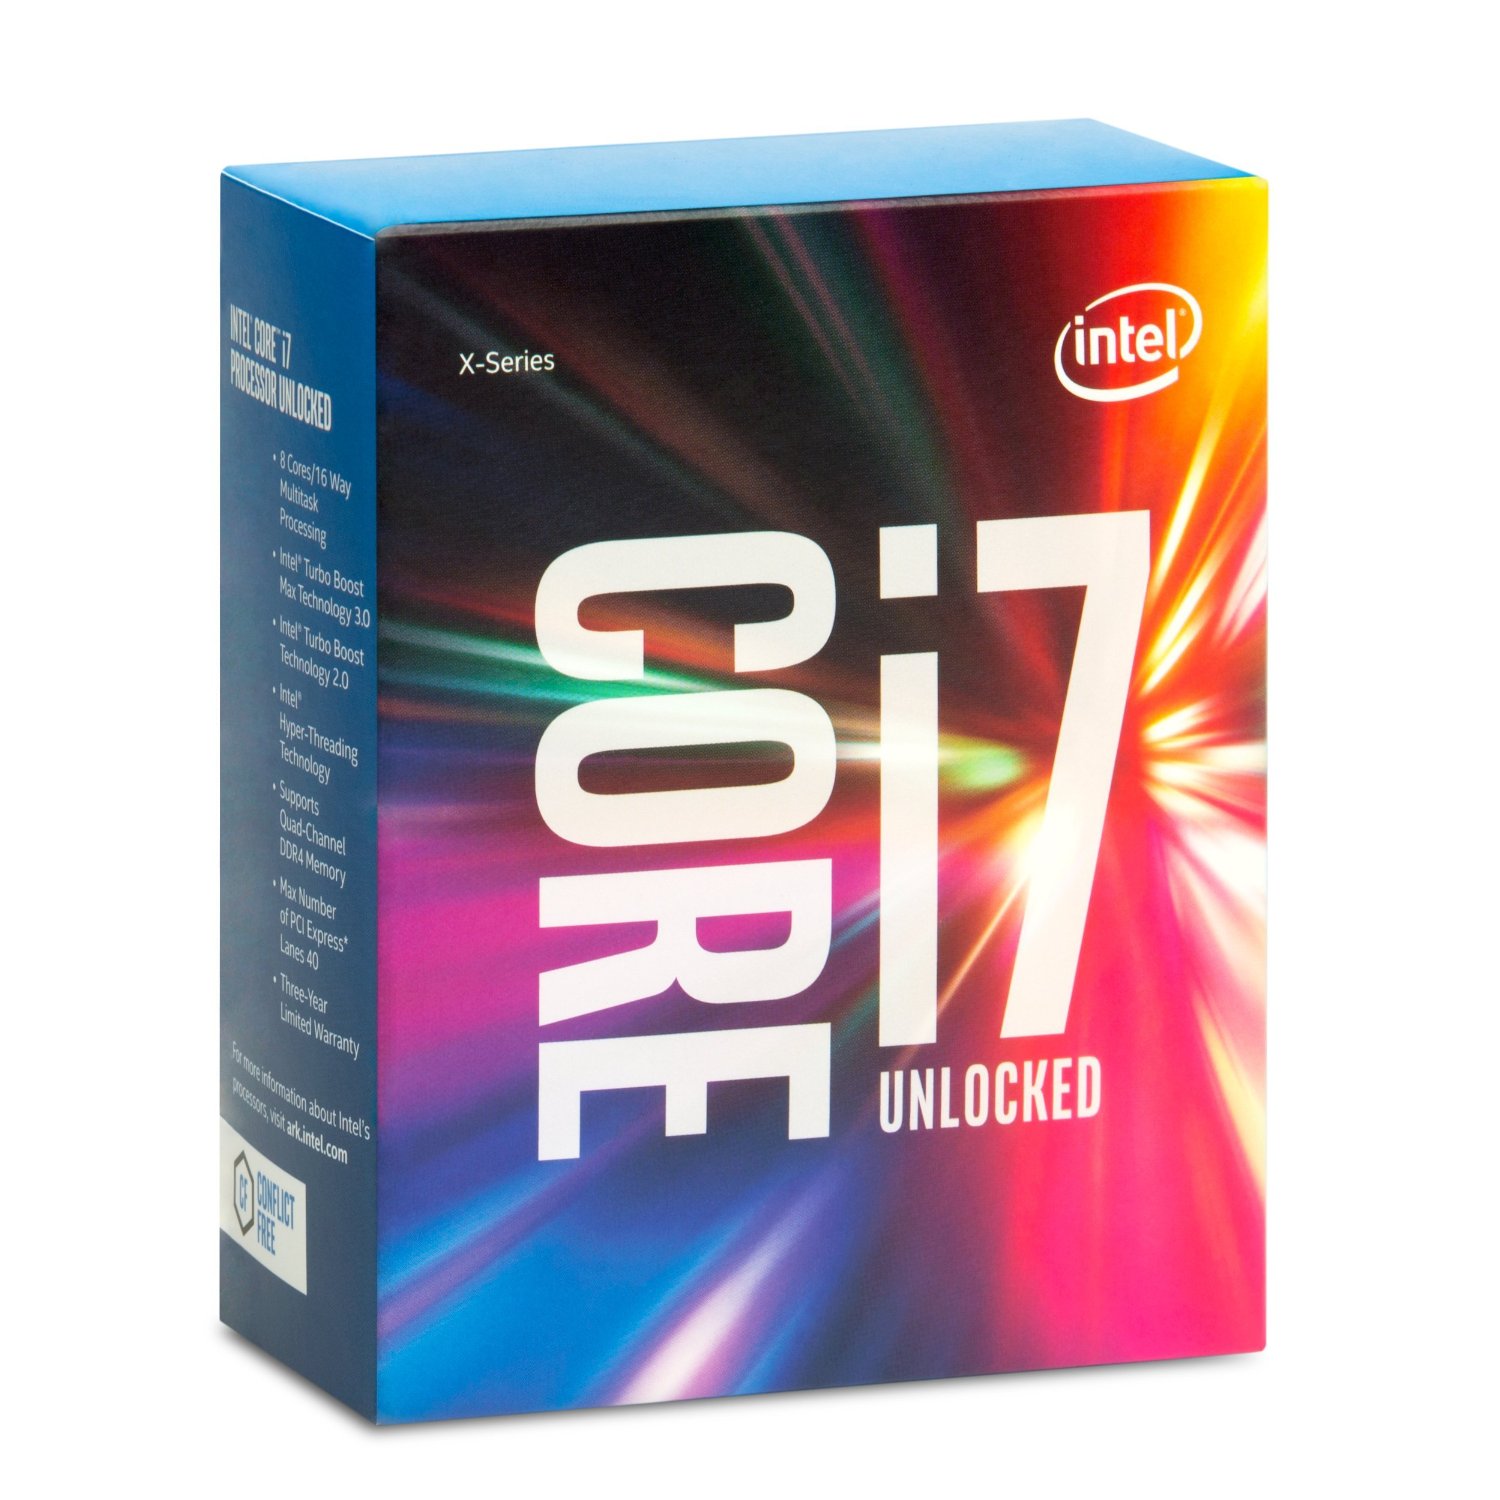 Procesor Intel Core i7-6900K title=Procesor Intel Core i7-6900K